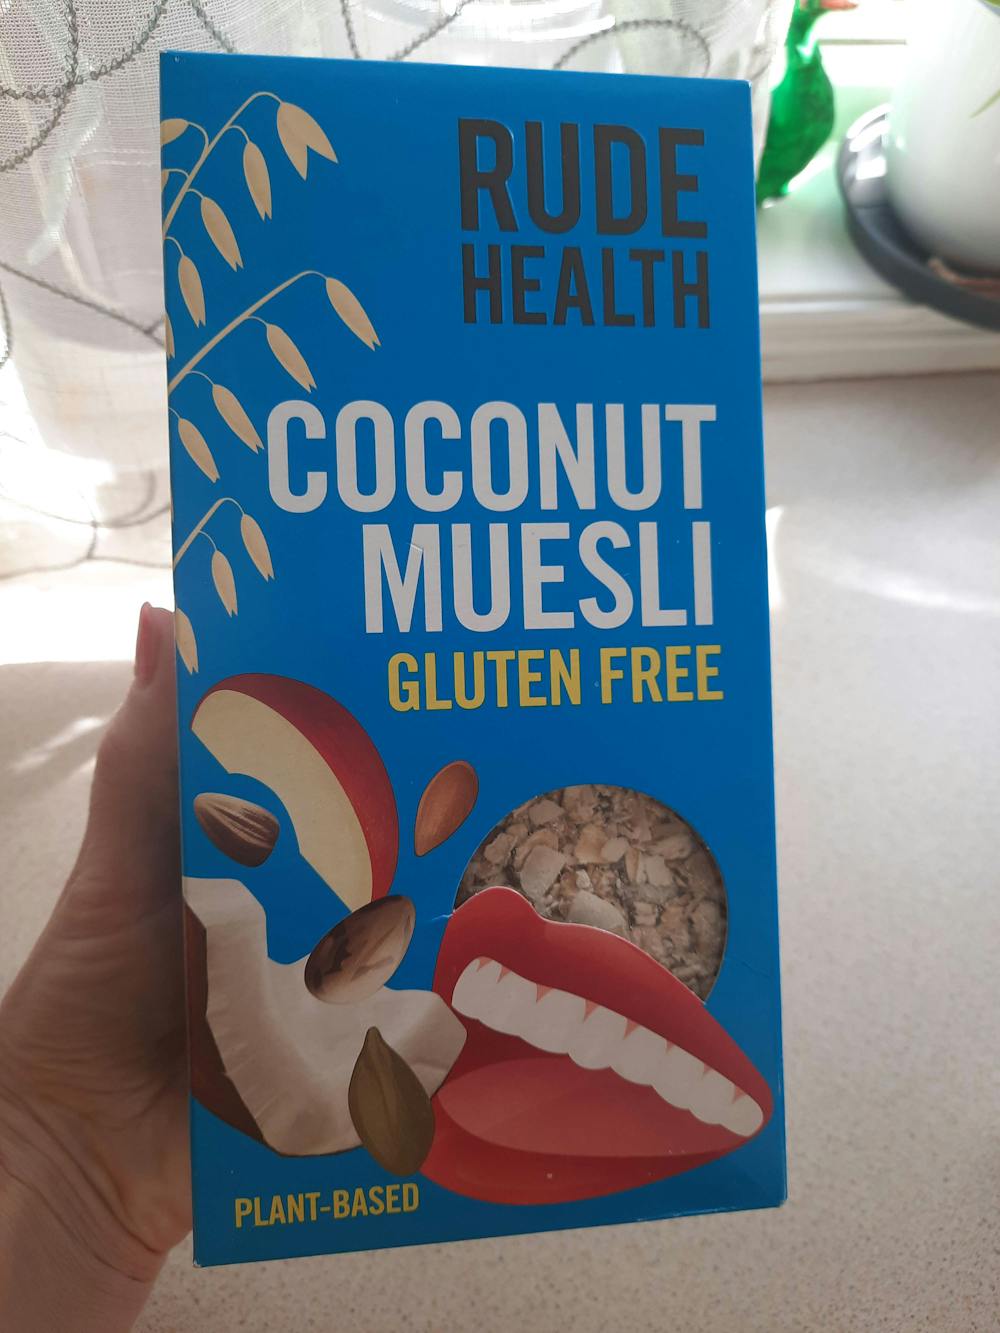 Coconut muesli, Rode health